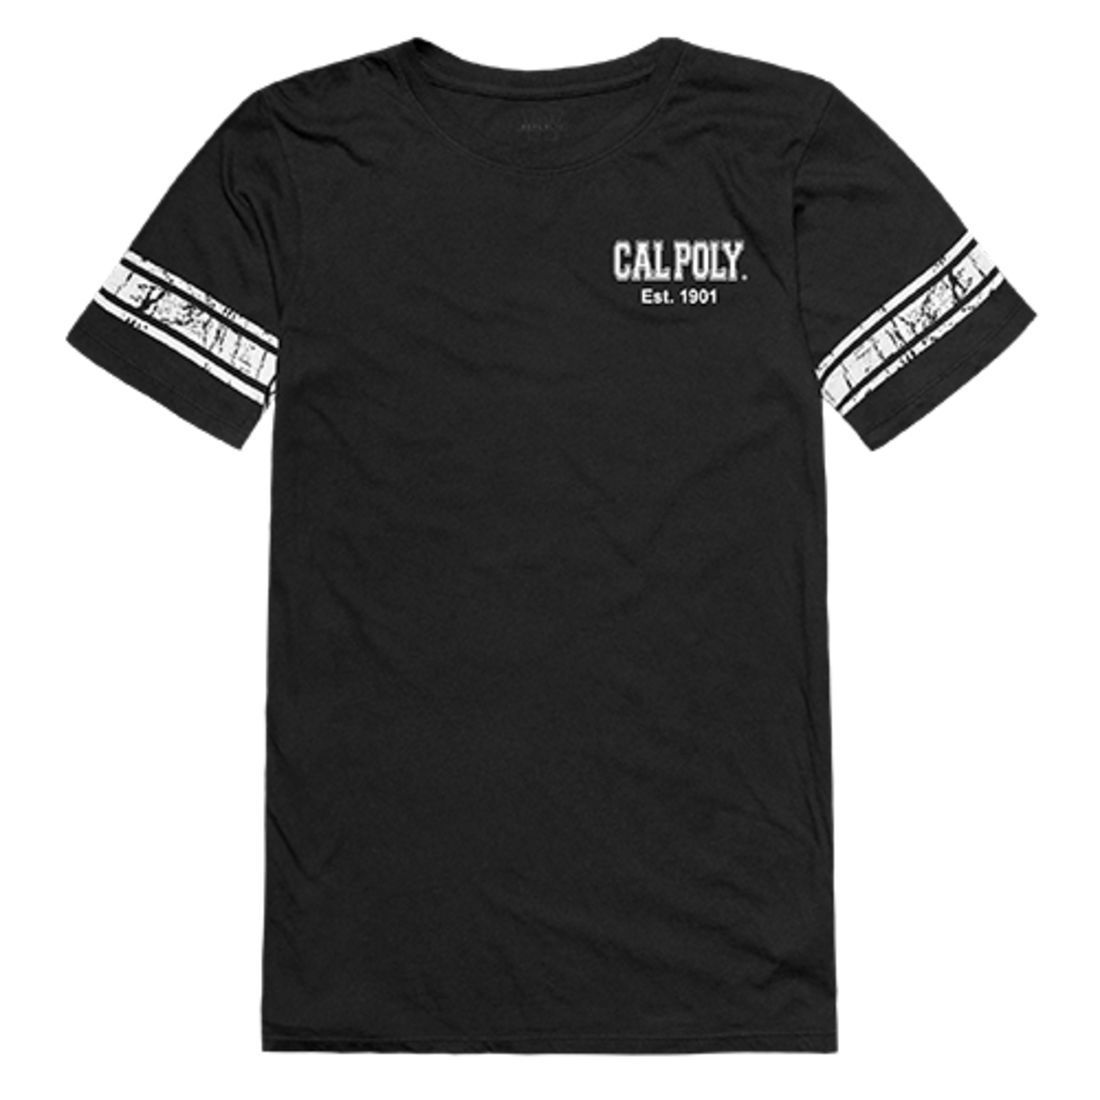 Cal Poly California Polytechnic State University Mustangs Womens Practice Tee T-Shirt Black-Campus-Wardrobe